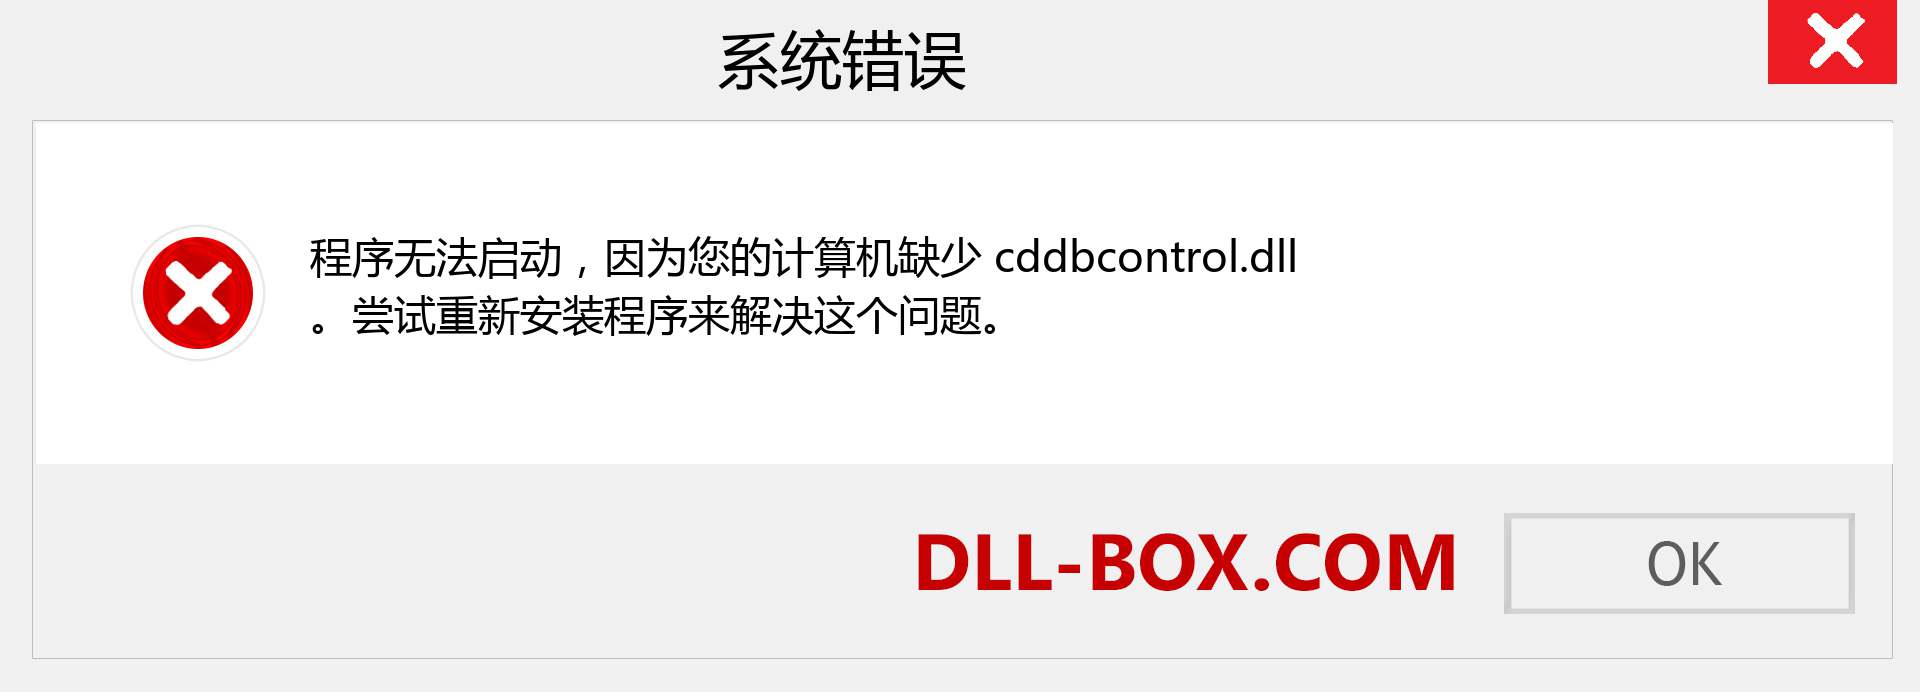 cddbcontrol.dll 文件丢失？。 适用于 Windows 7、8、10 的下载 - 修复 Windows、照片、图像上的 cddbcontrol dll 丢失错误